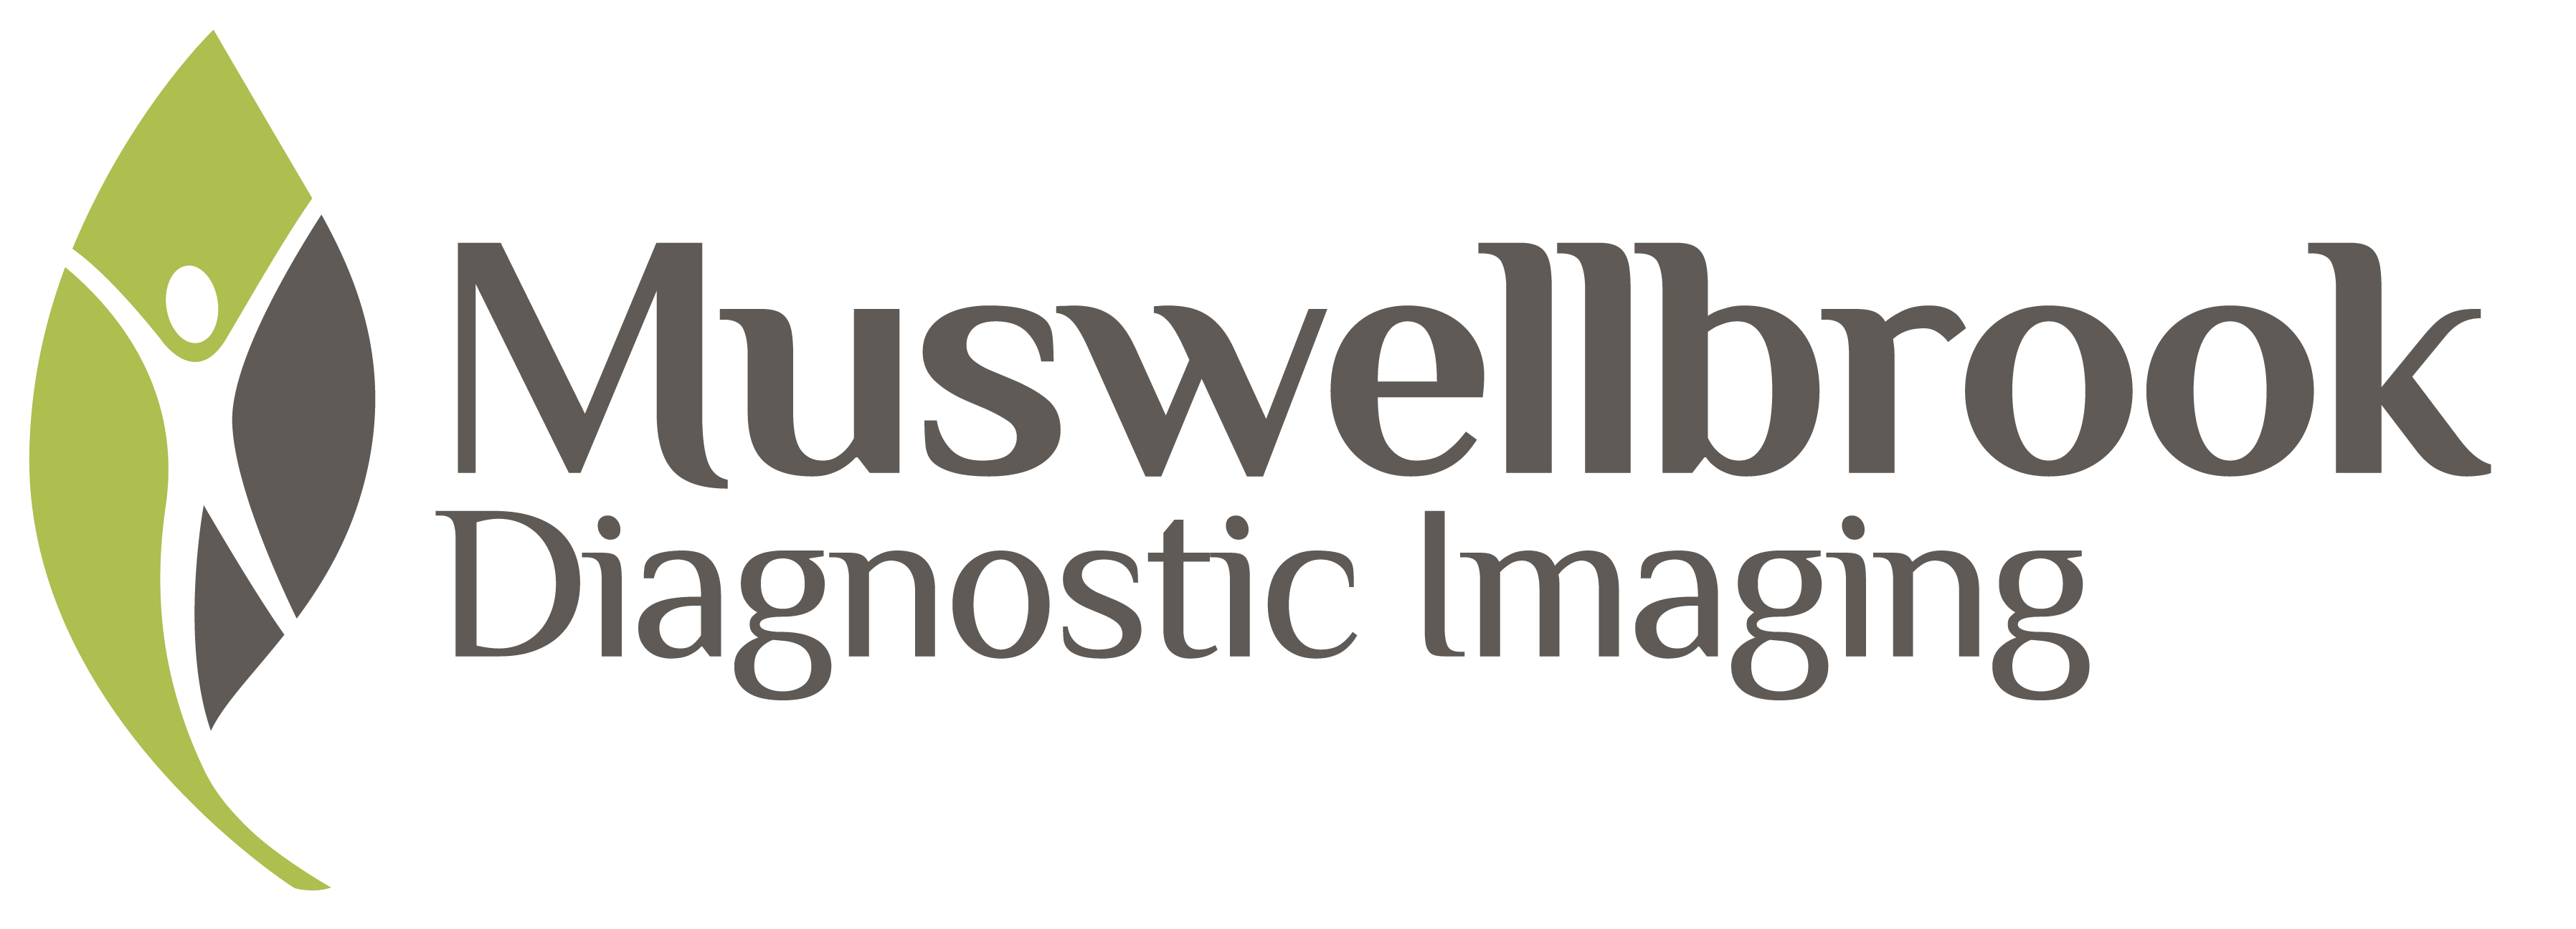 Muswellbrook Diagnostic Imaging